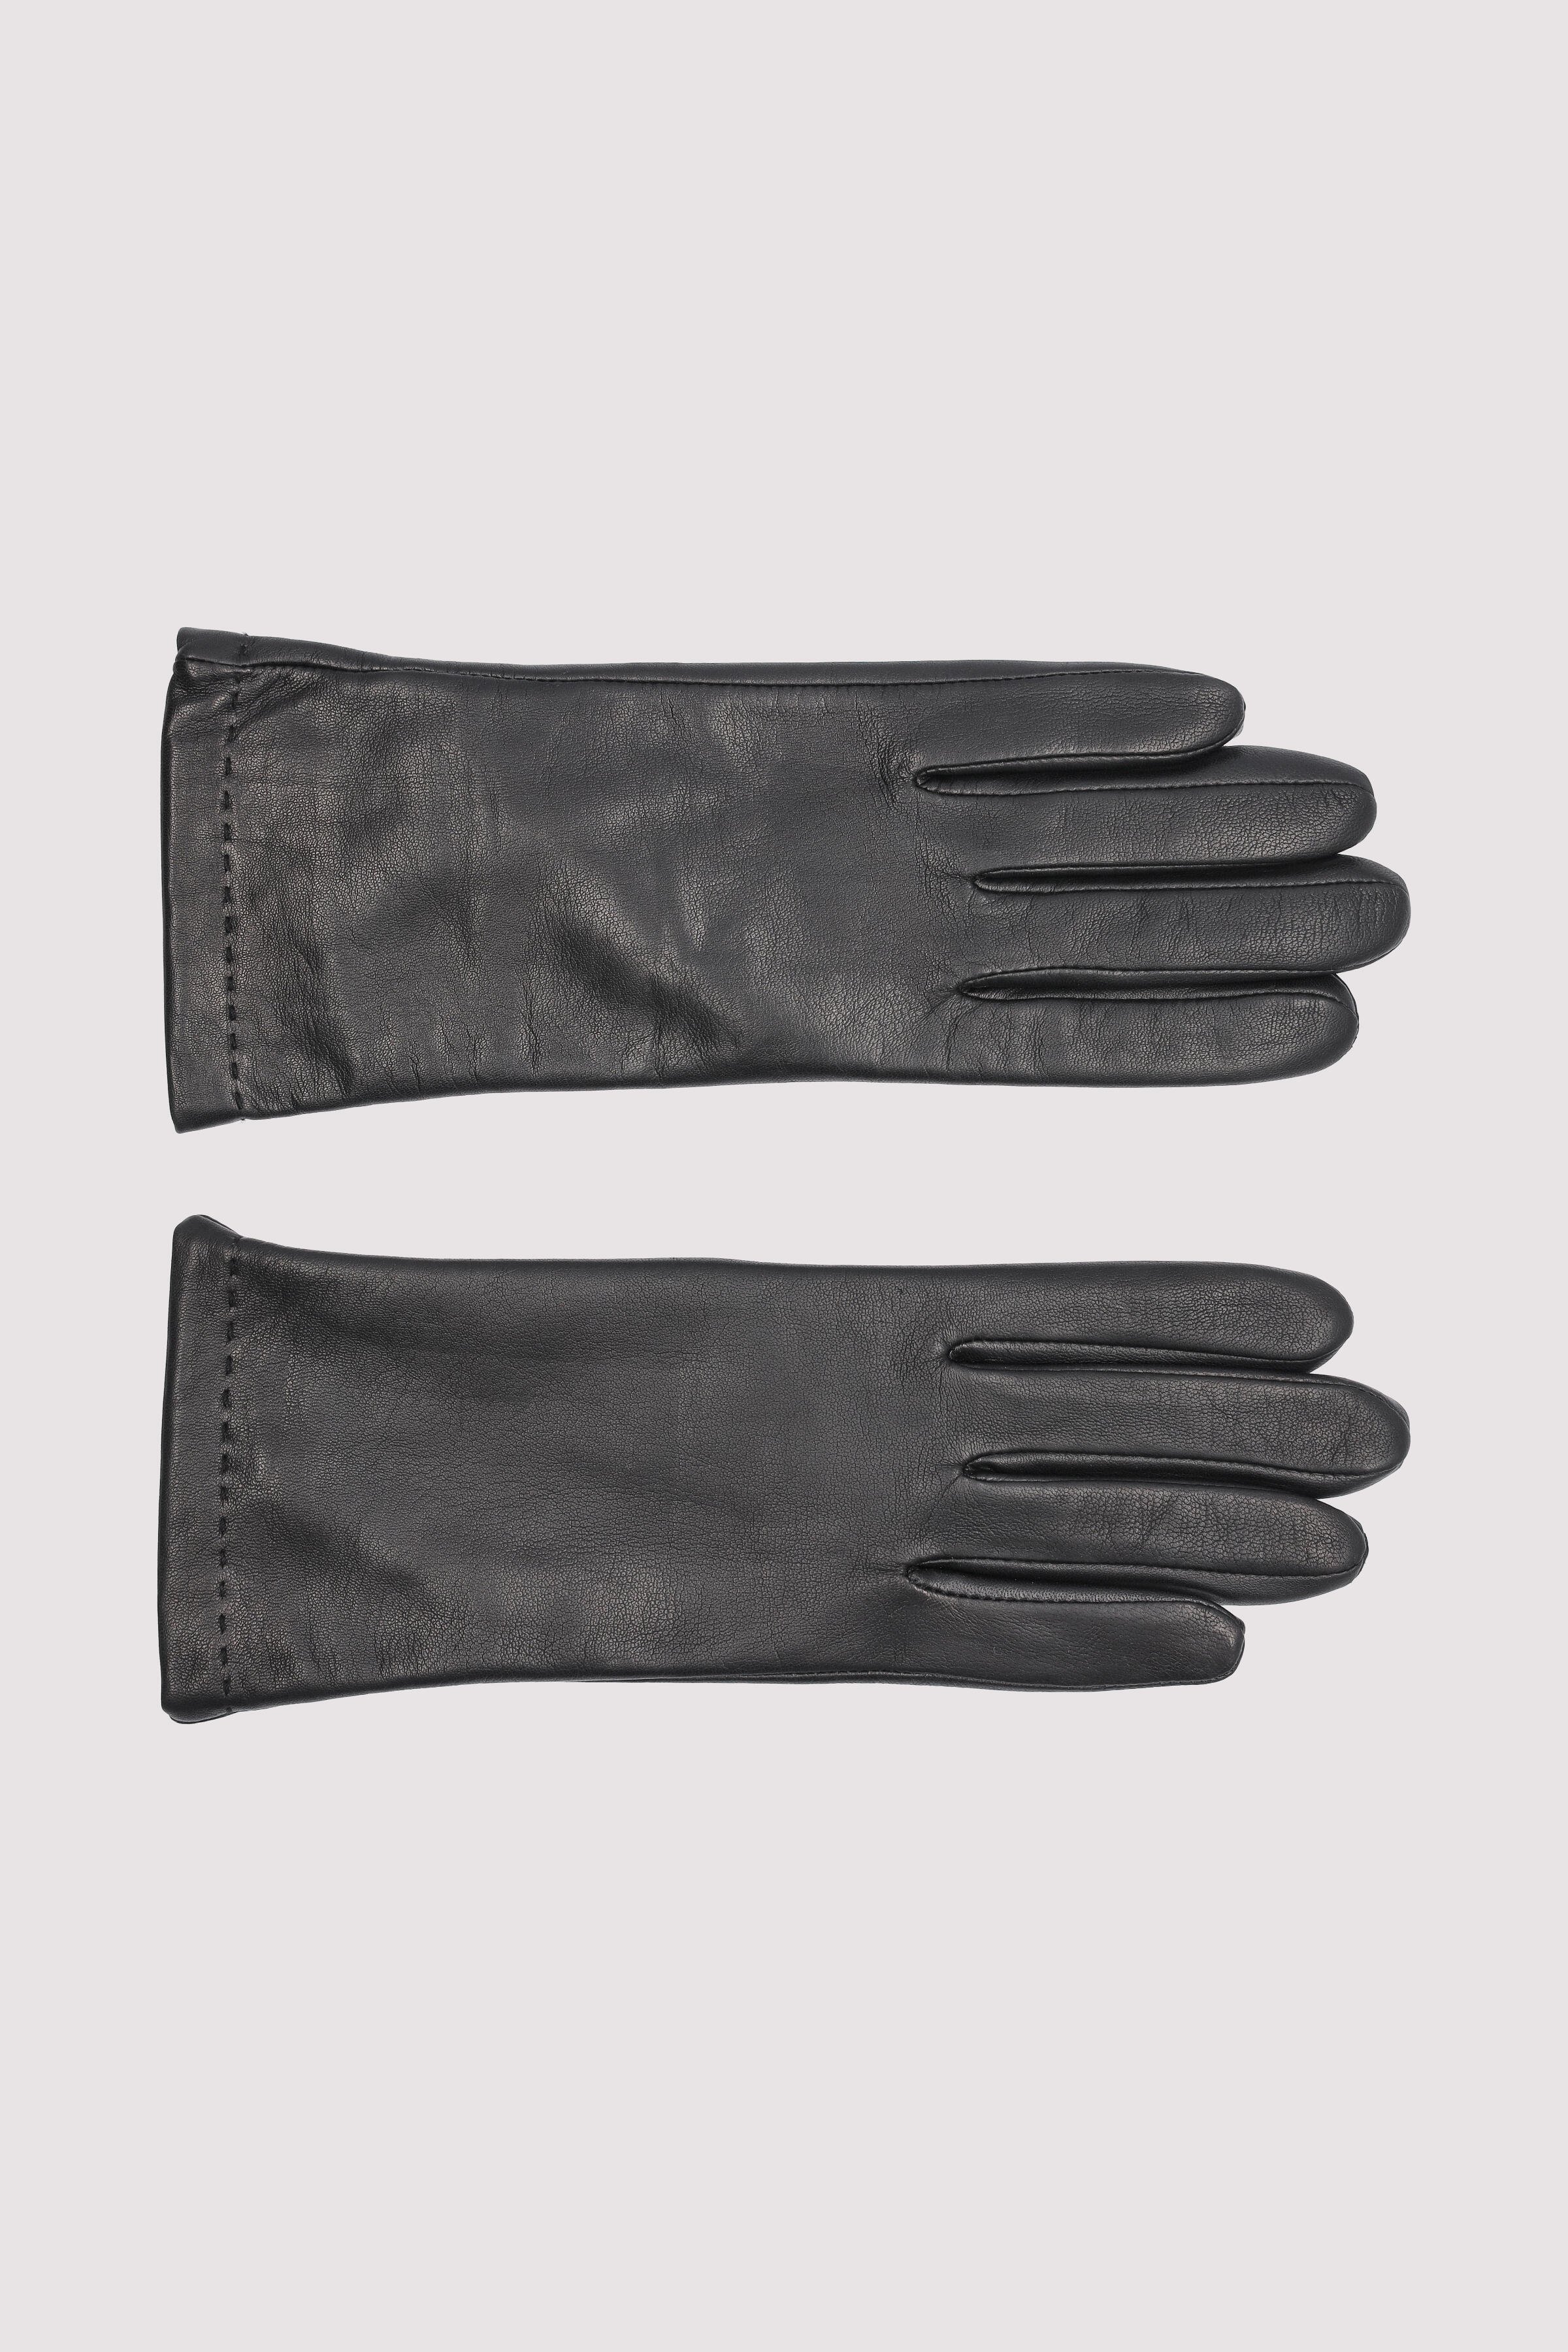 Gloves, leather, knitted inner